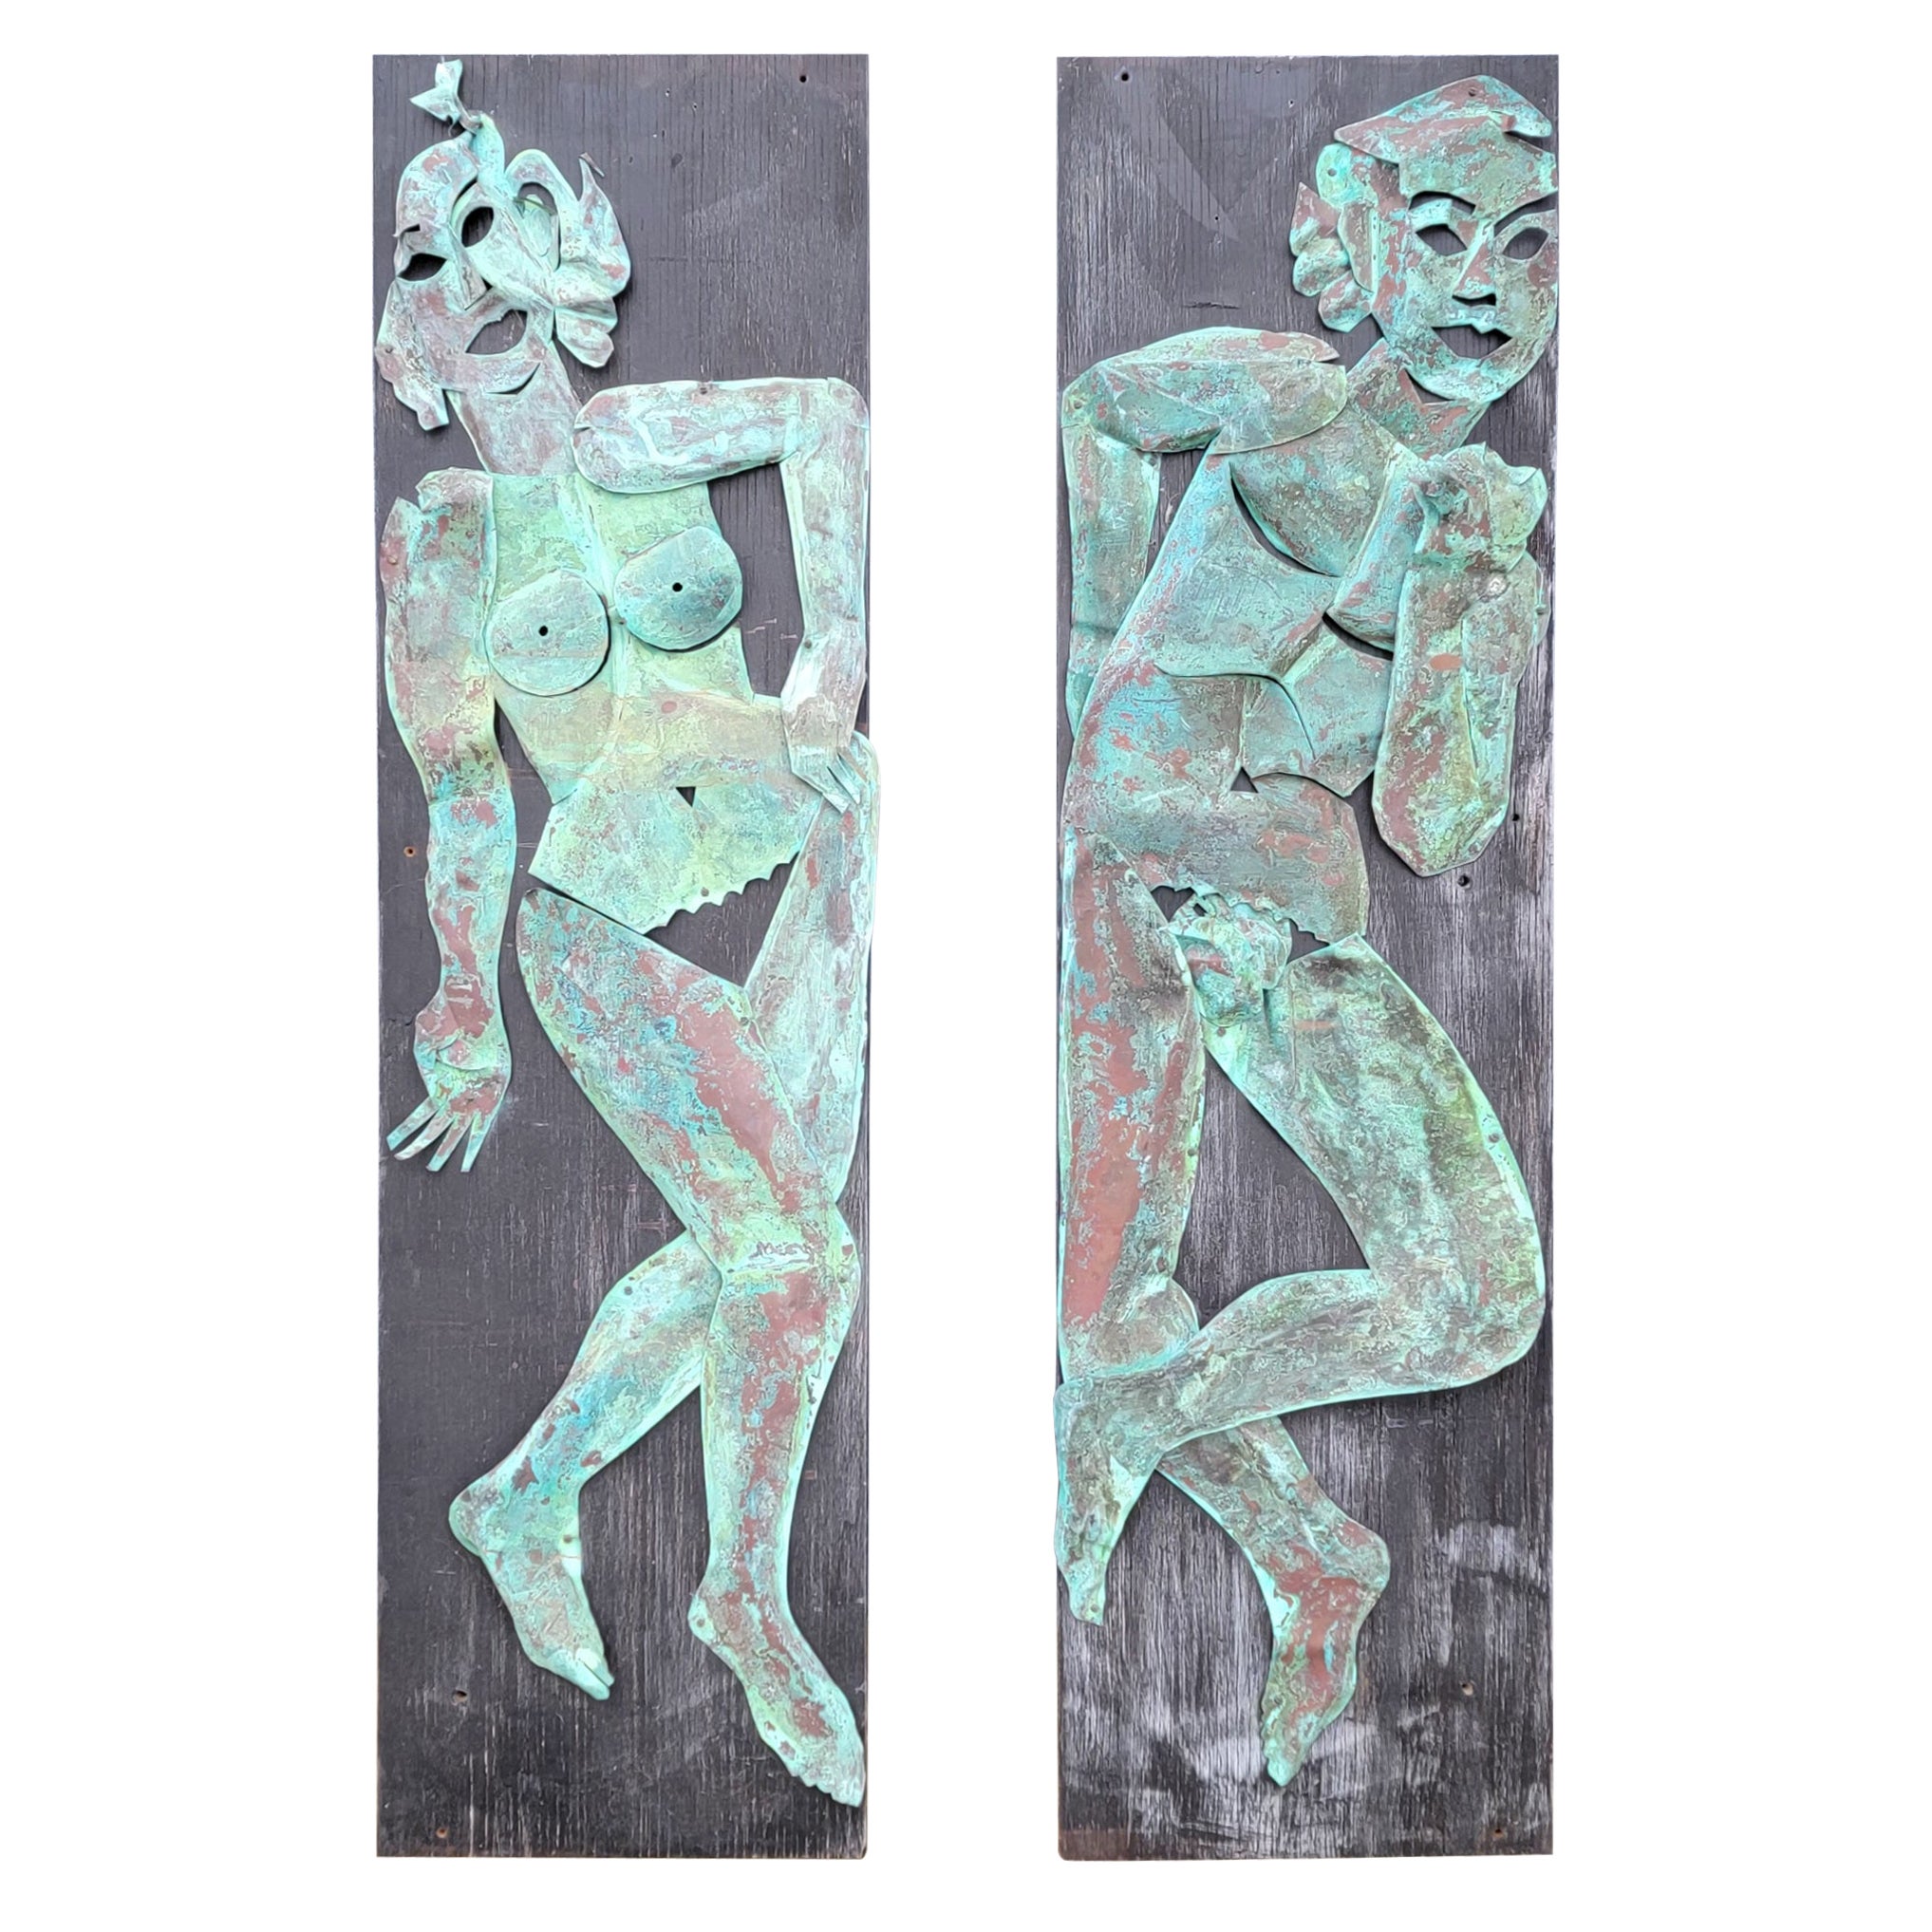 Copper Wall Art Sculpture Nude Figures Male & Female